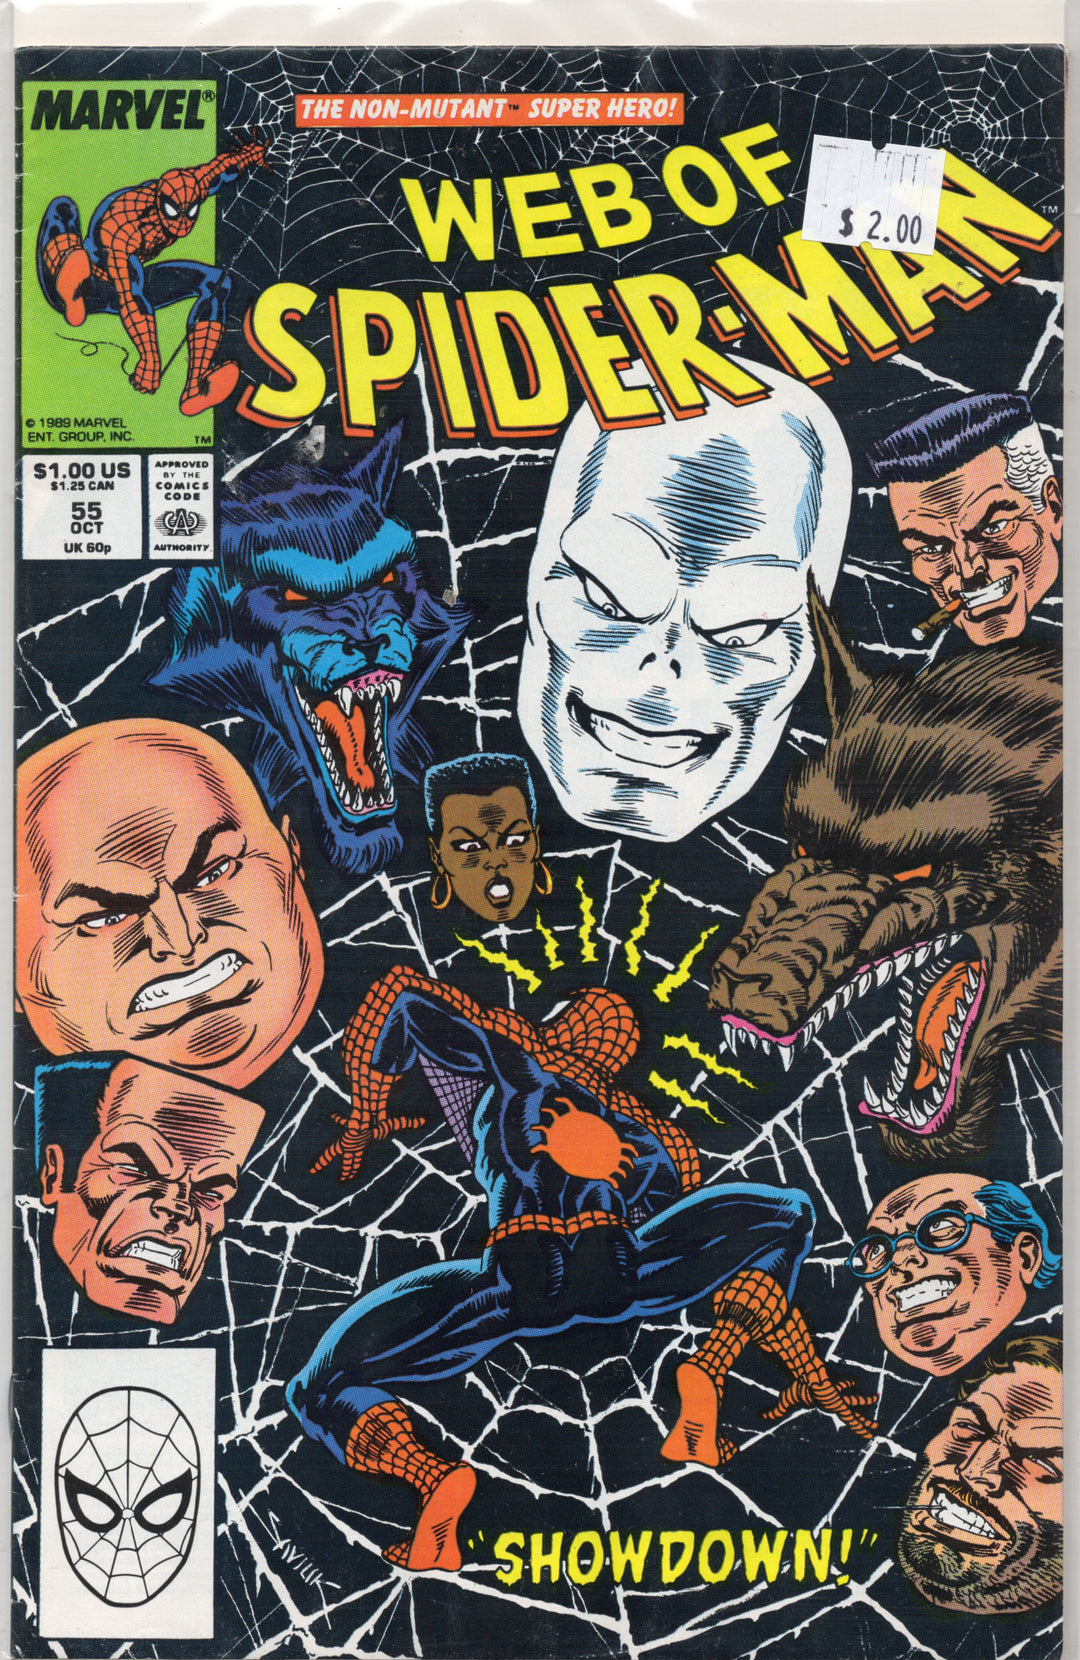 Web Of Spiderman #55